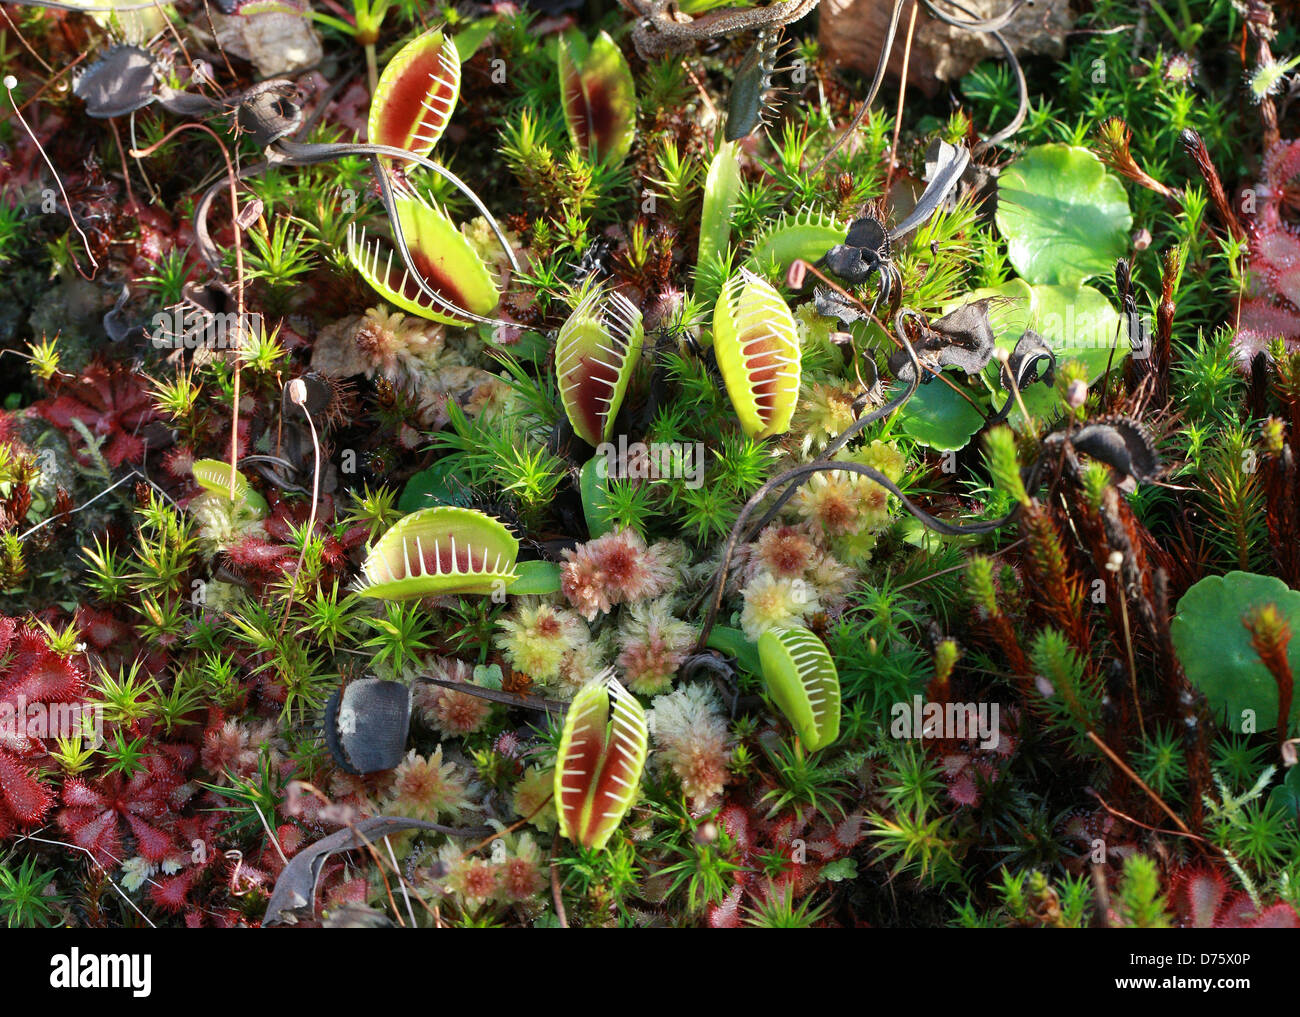 Venus Flytrap, Dionaea muscipula, Droseraceae. North Carolina, USA, Amérique du Nord. Une plante carnivore. Banque D'Images